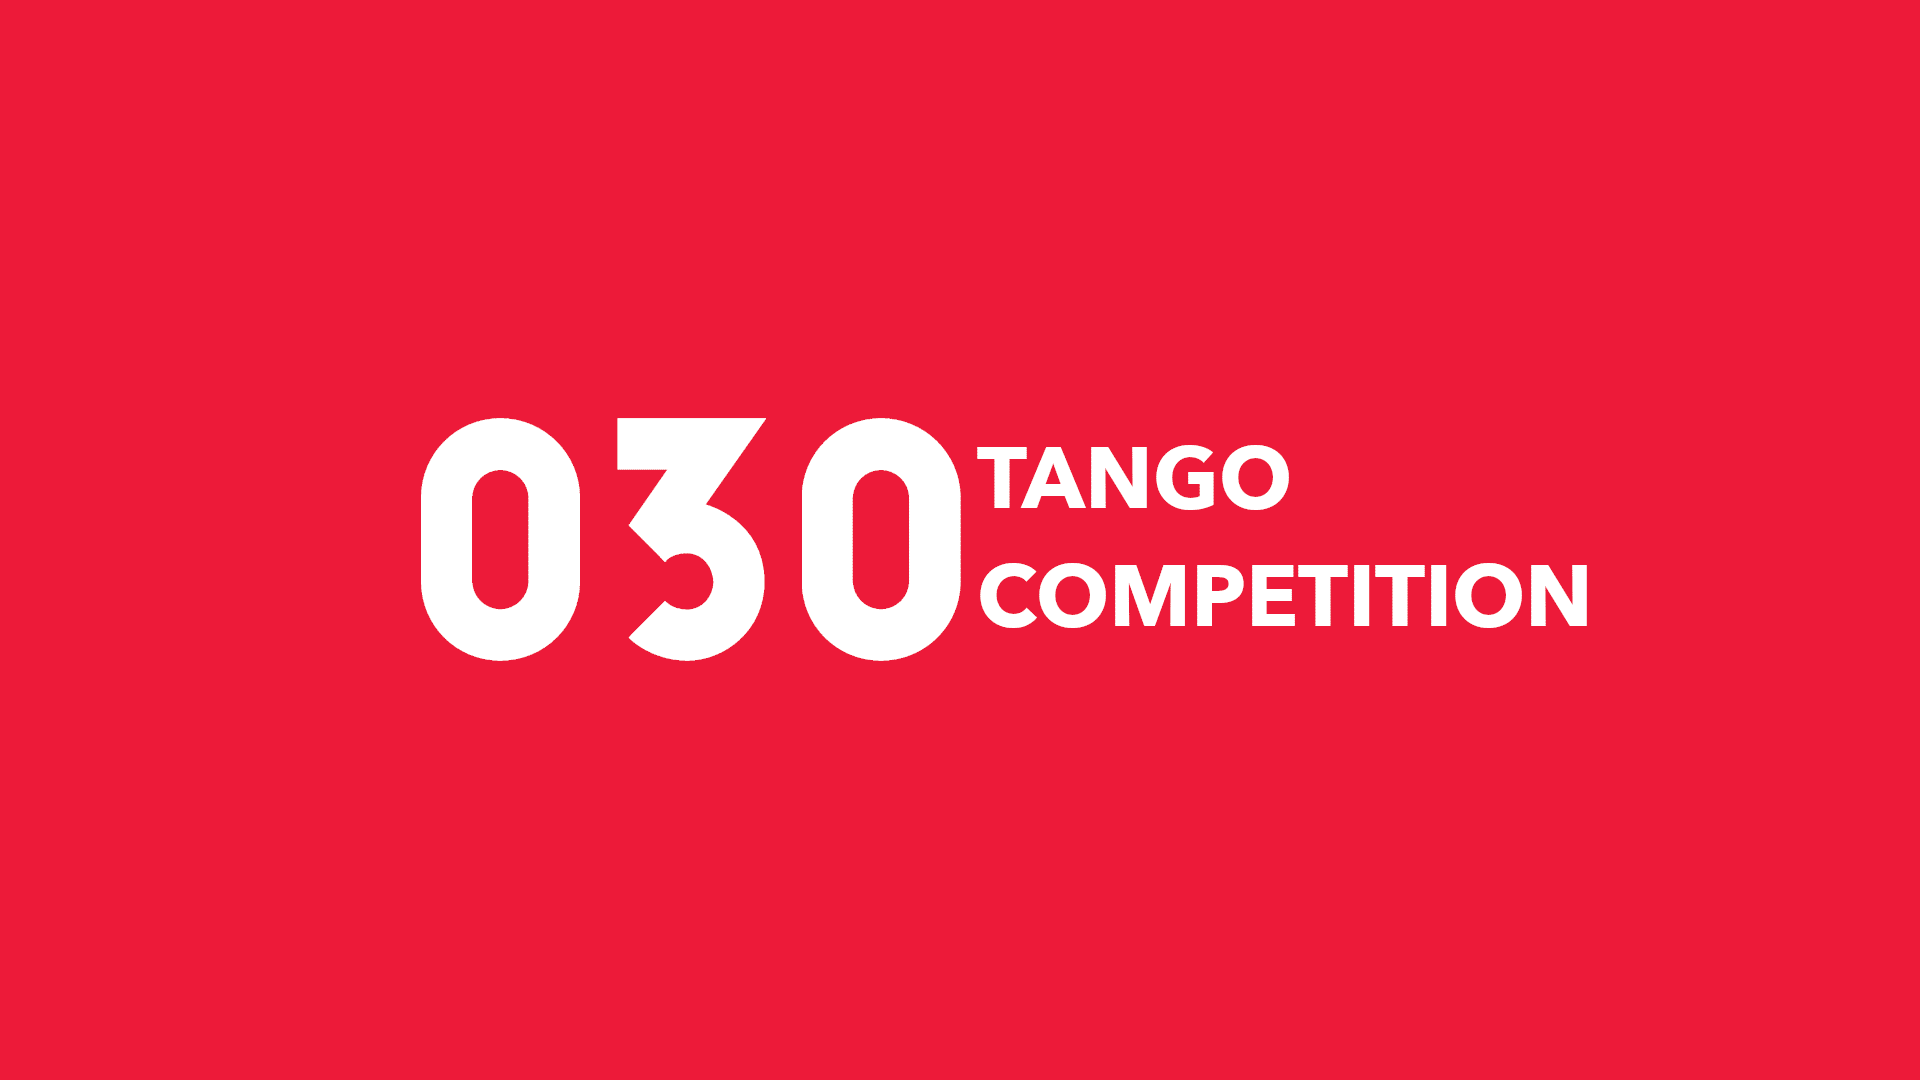 Tango Competition